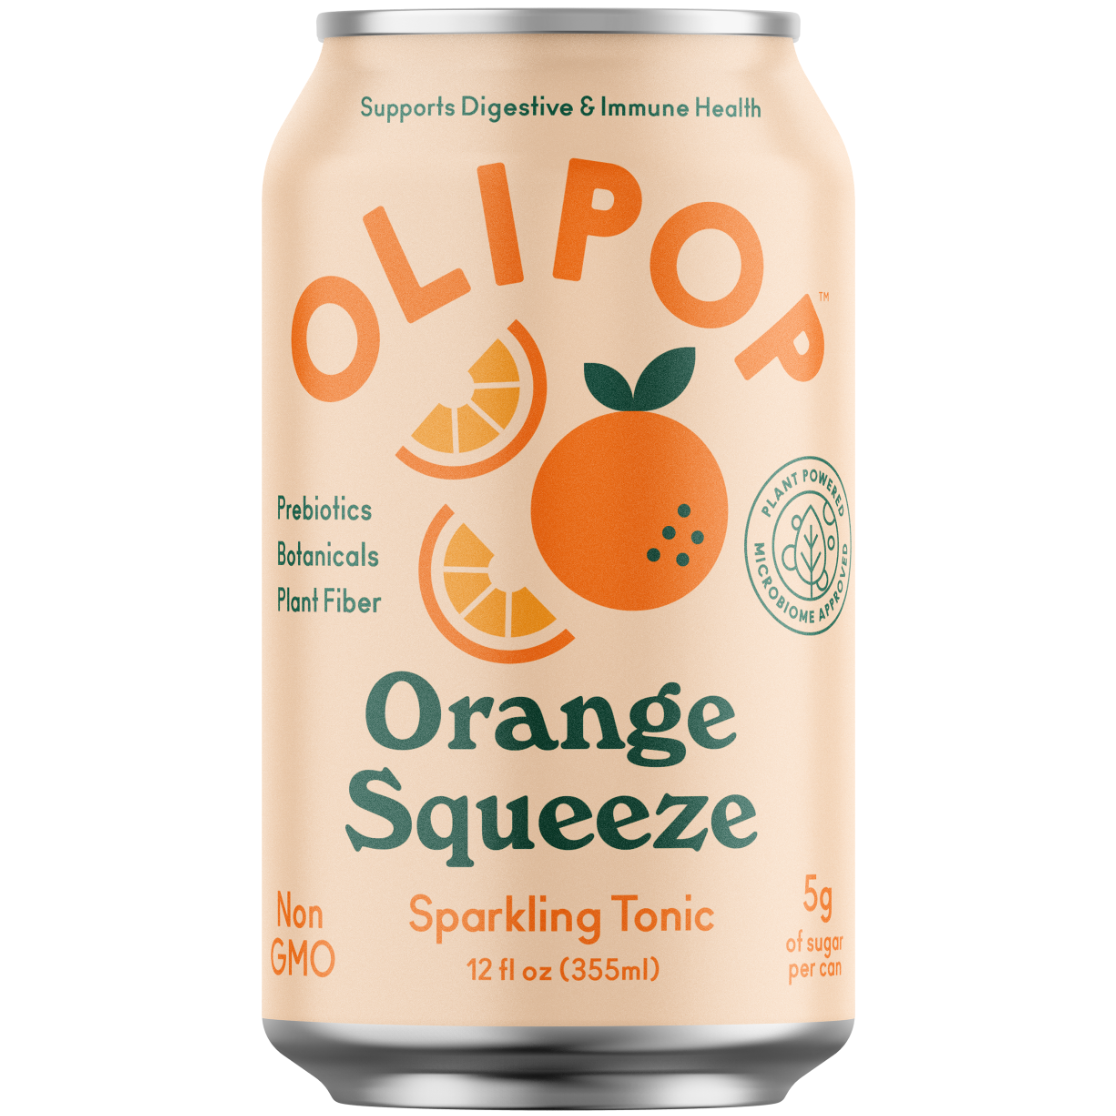 Olipop Prebiotic Sparkling Tonic Drink